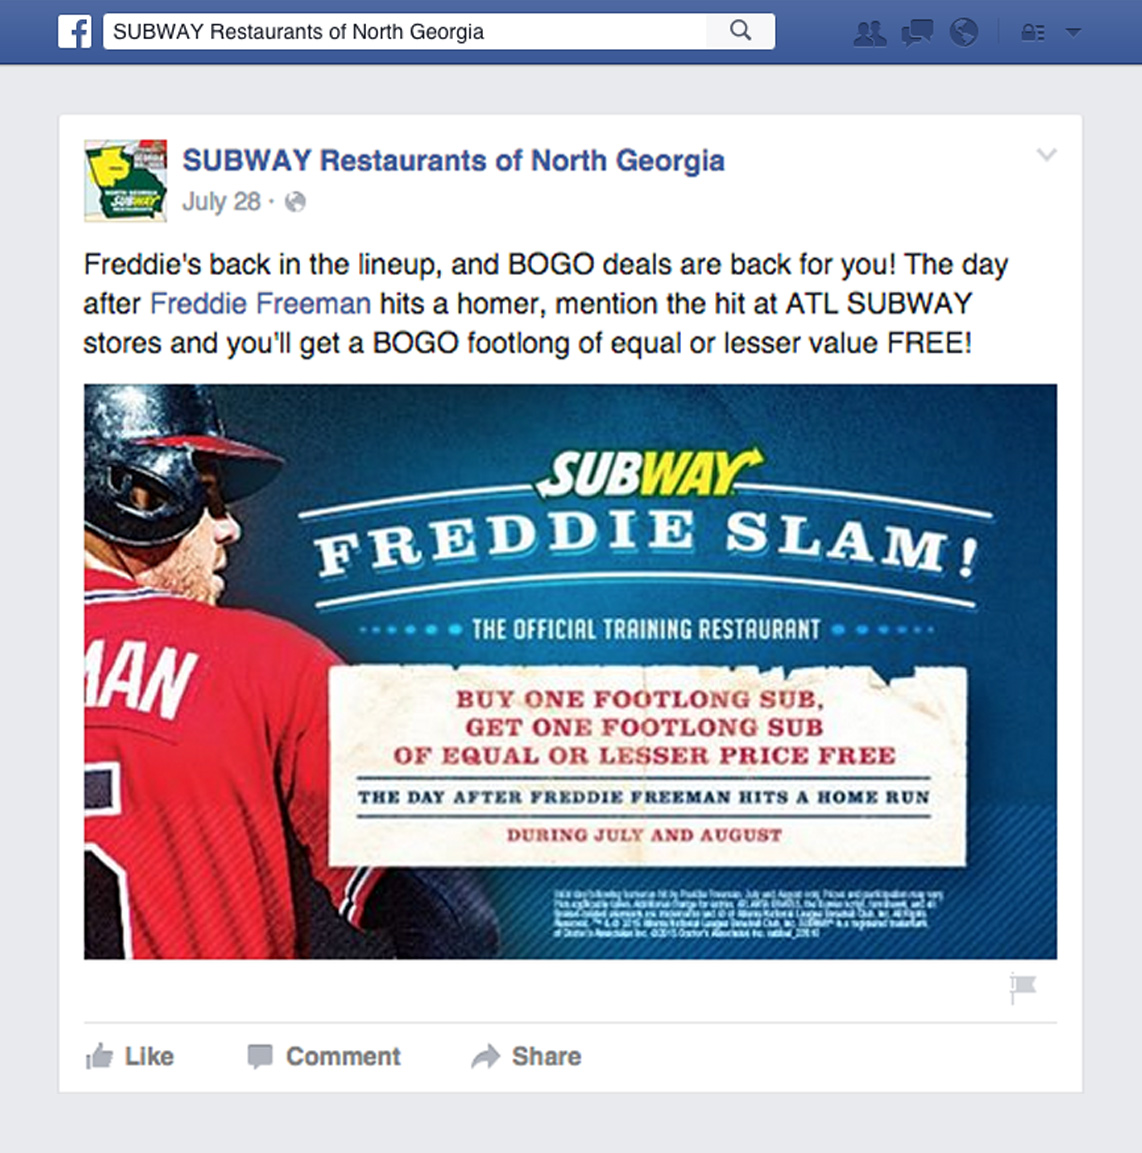 Subway, Freddie Slam: Social Media Campaign